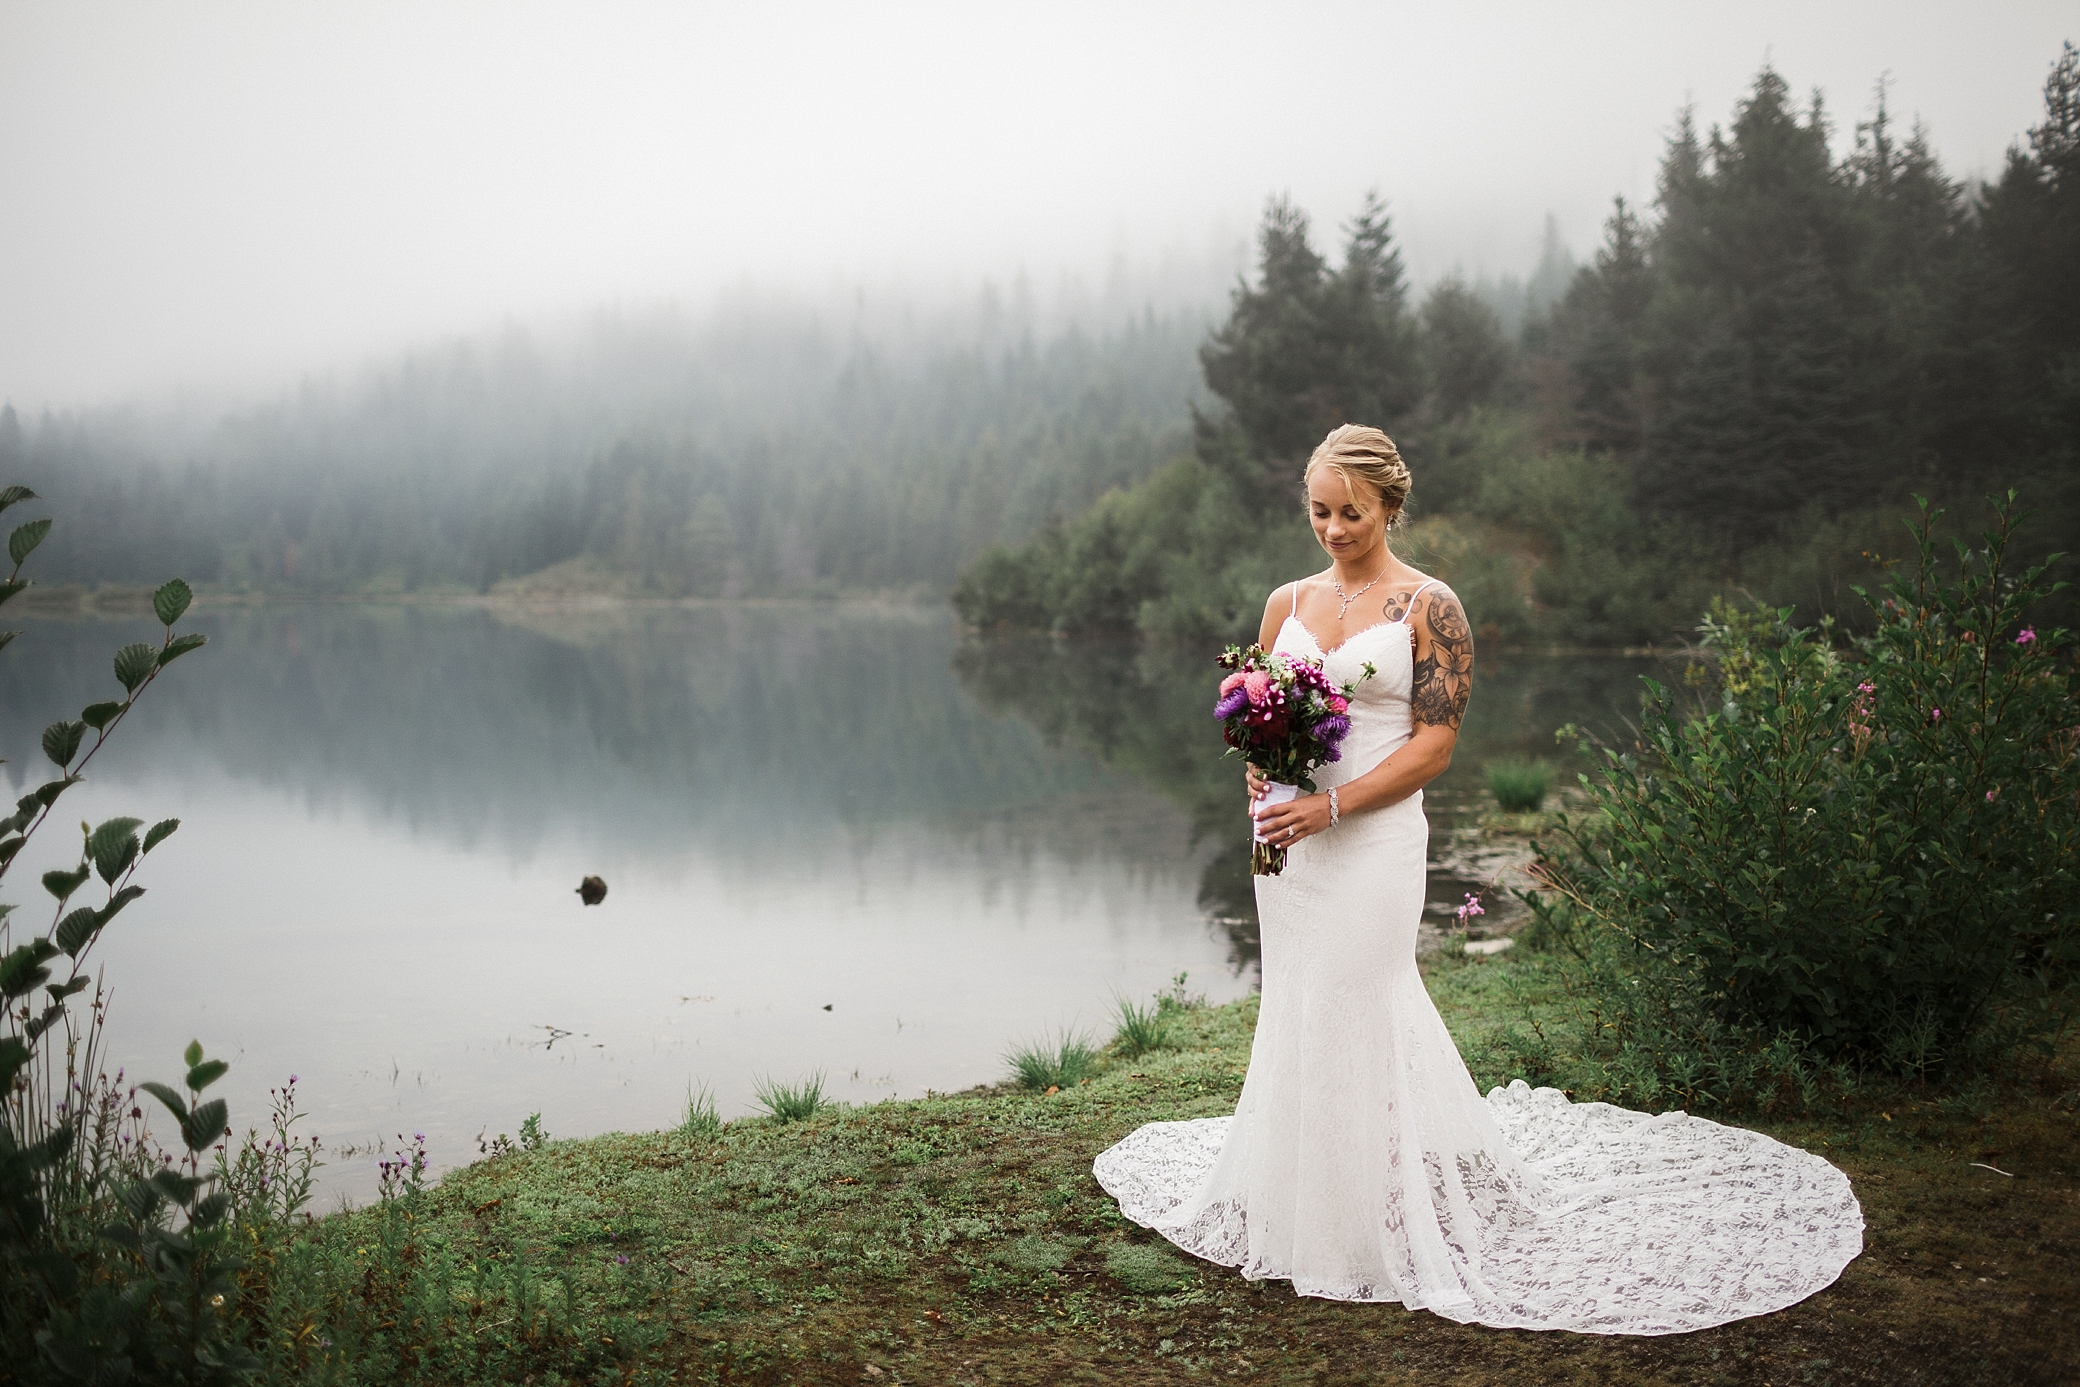 Bridal Portraits at Gold Creek Pond in Snoqualmie, WA | Megan Montalvo Photography